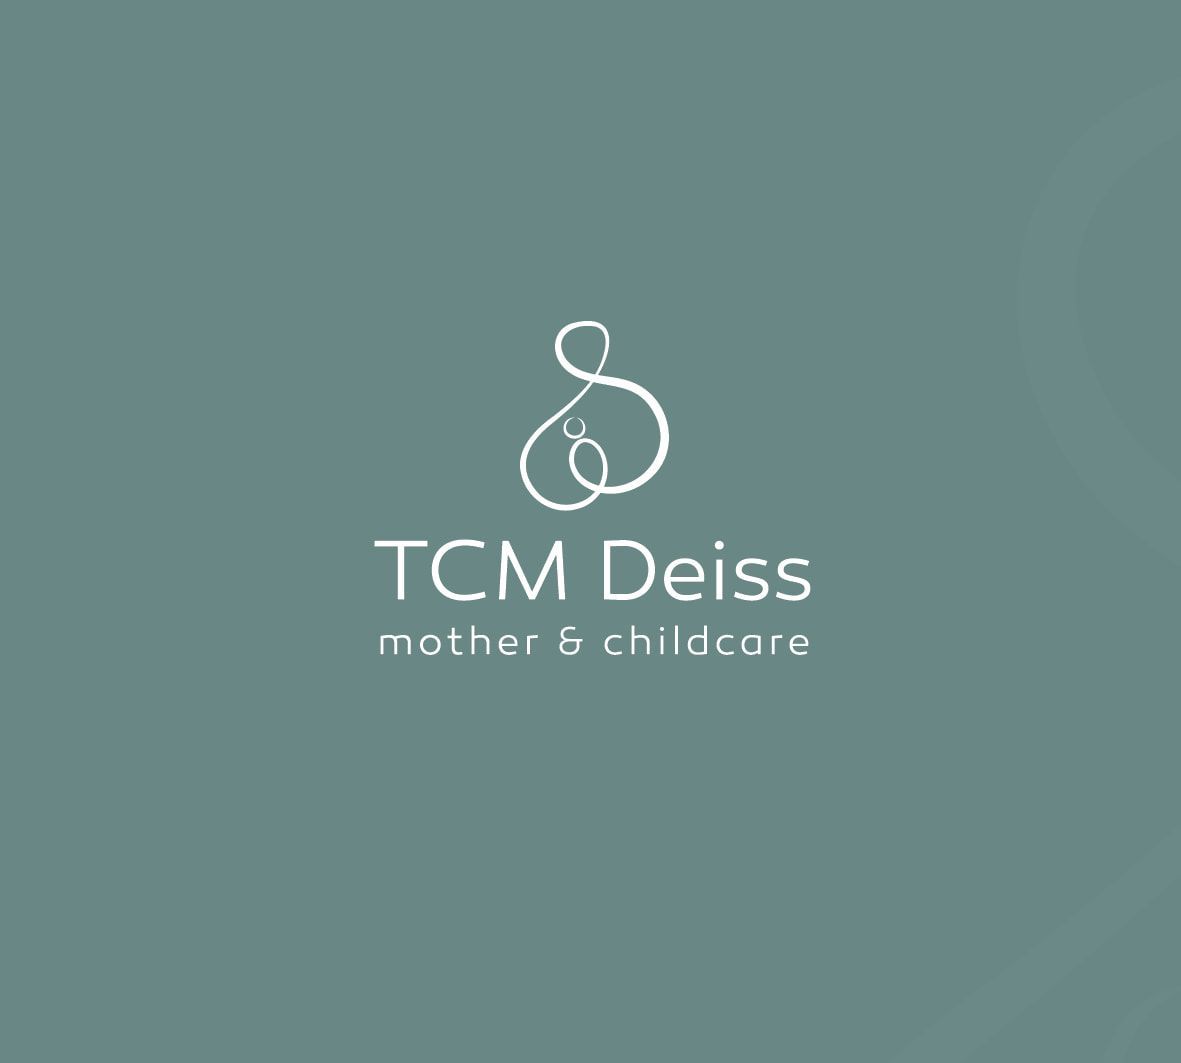 TCM Deiss – mother & childcare